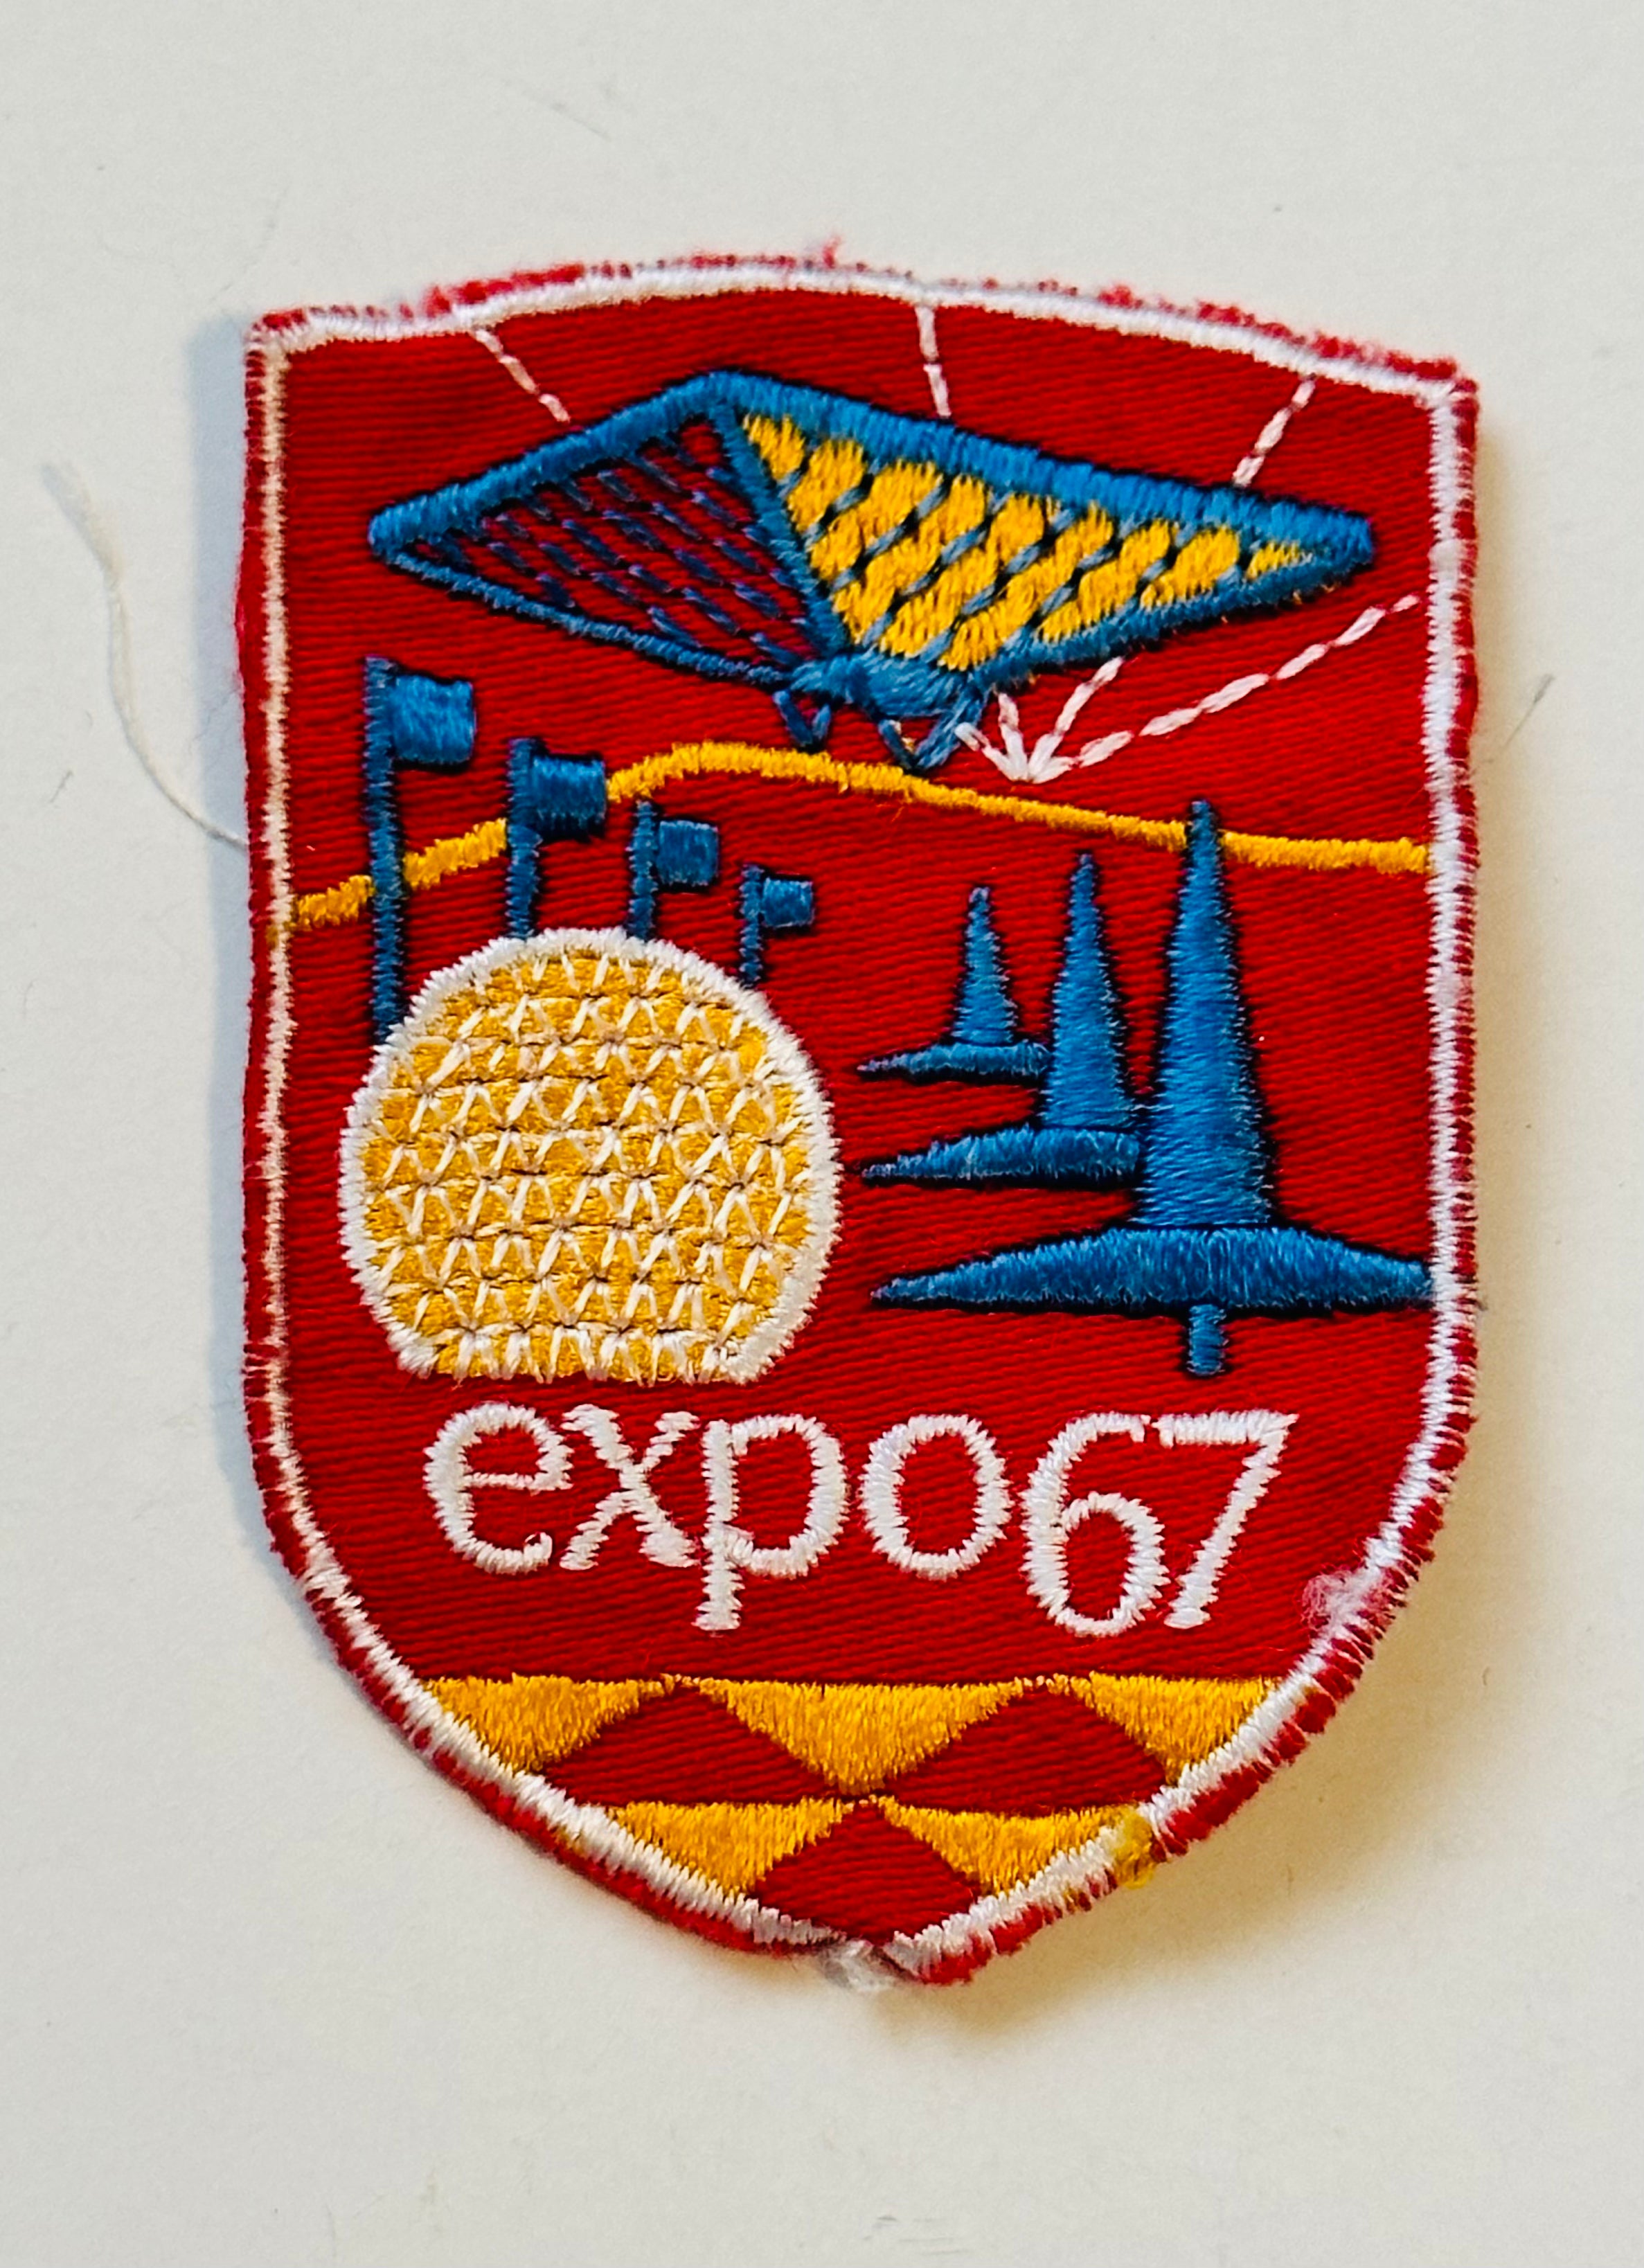 Expo 1967 original vintage patch 1967